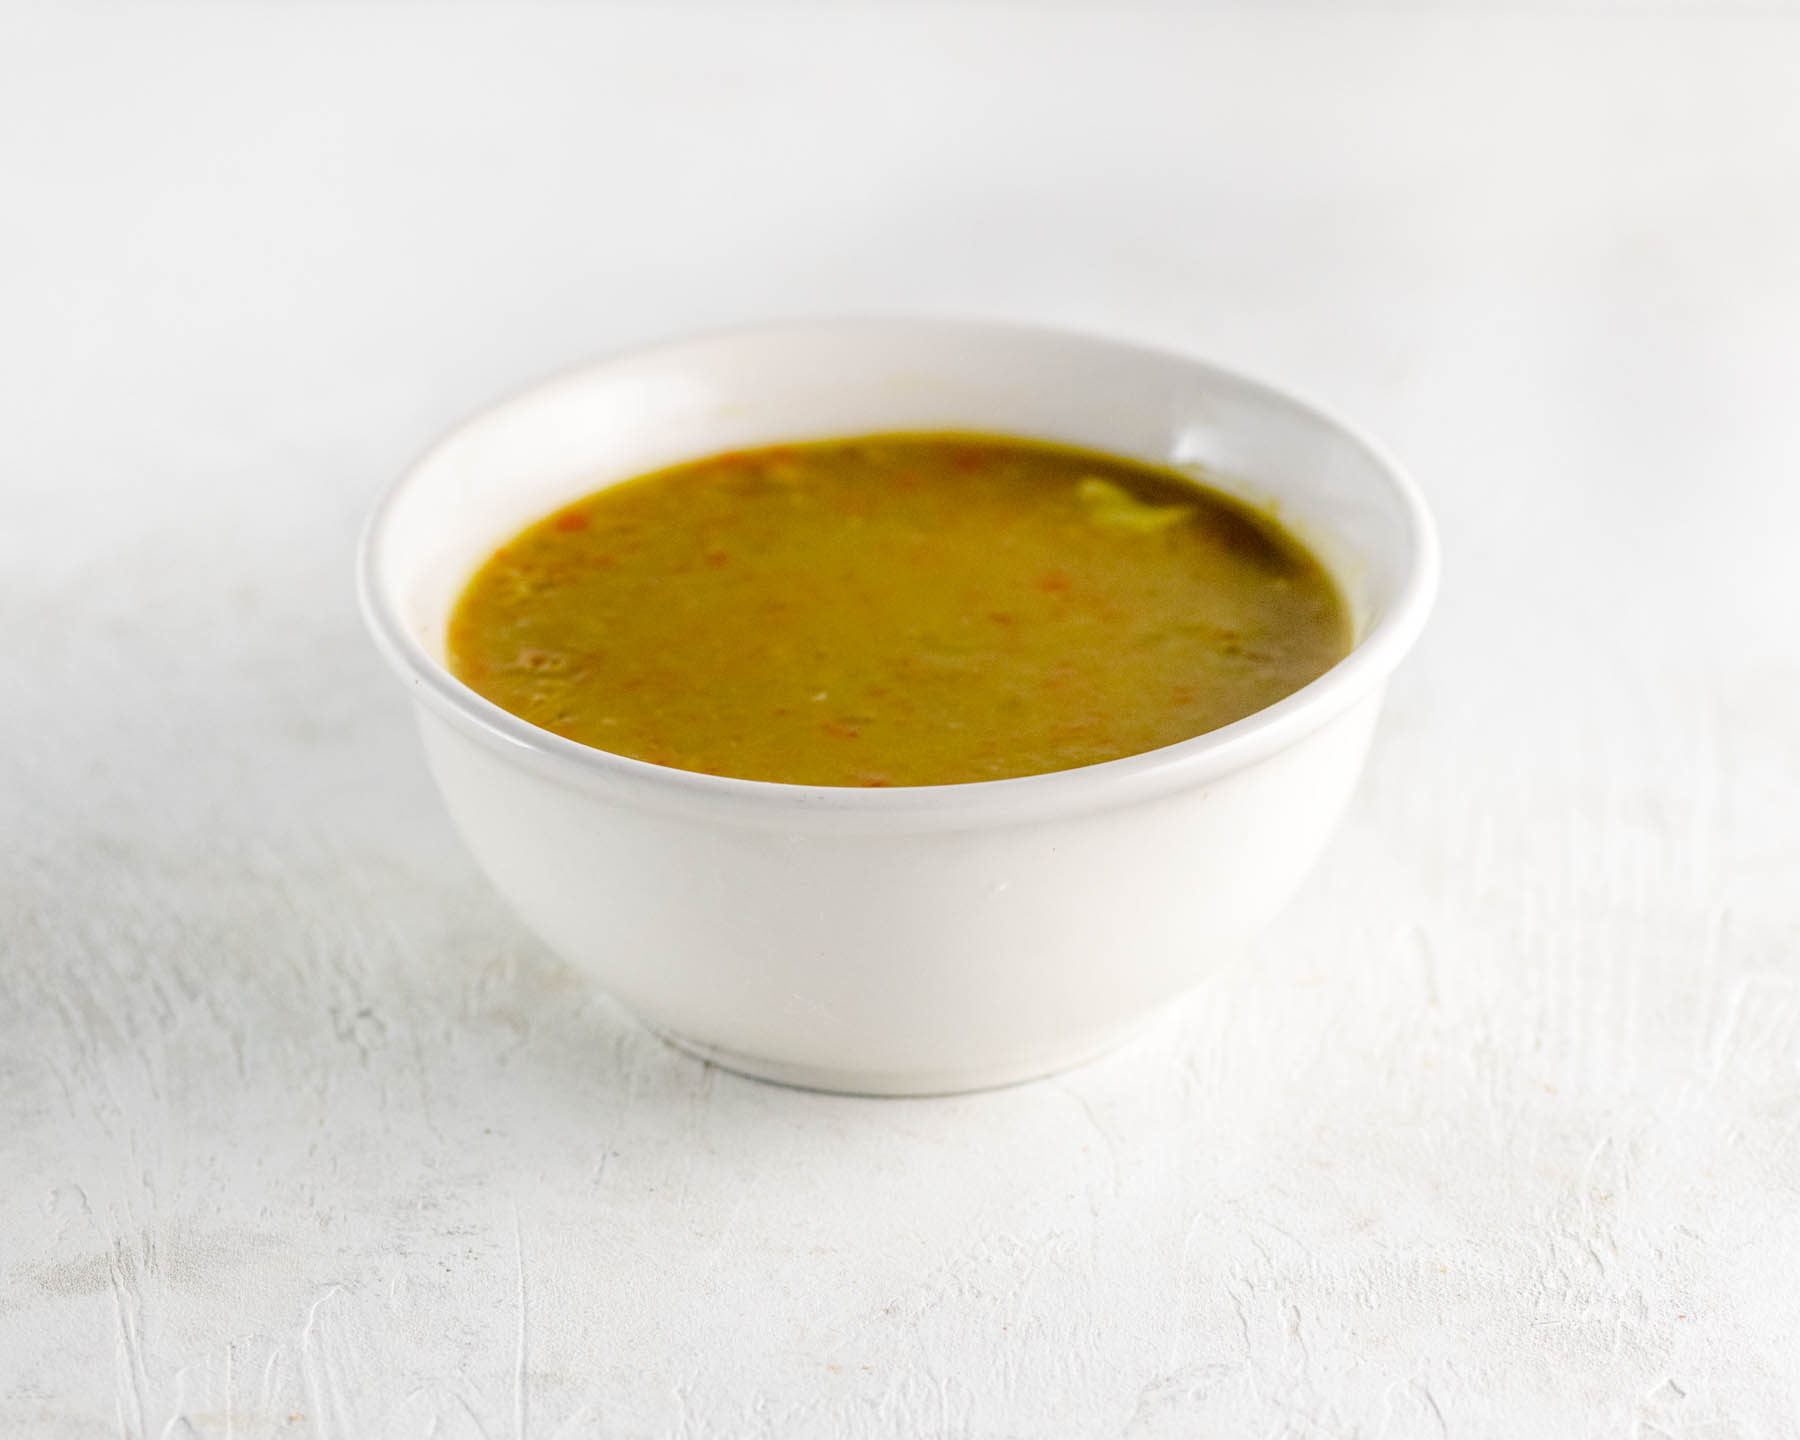 split pea soup in a white cup